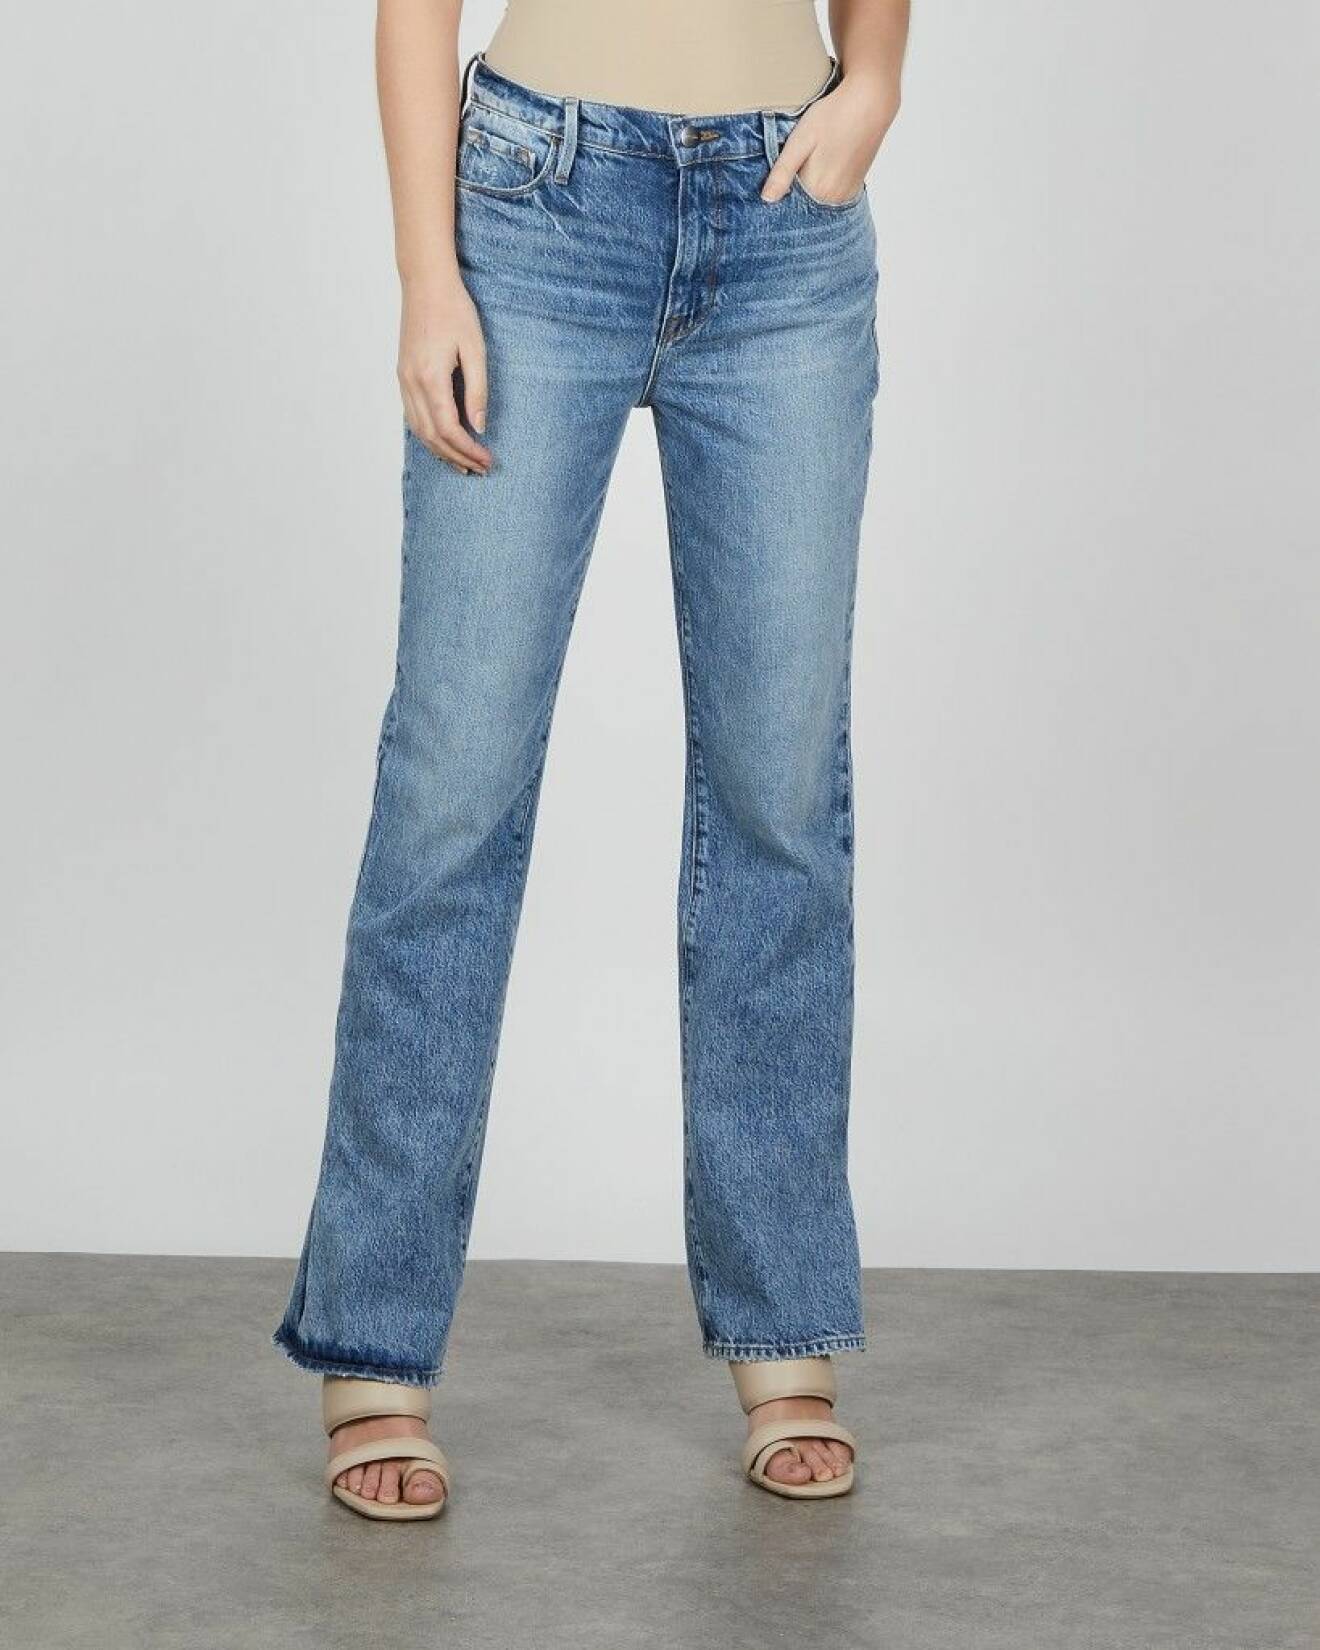 jeans från frame denim